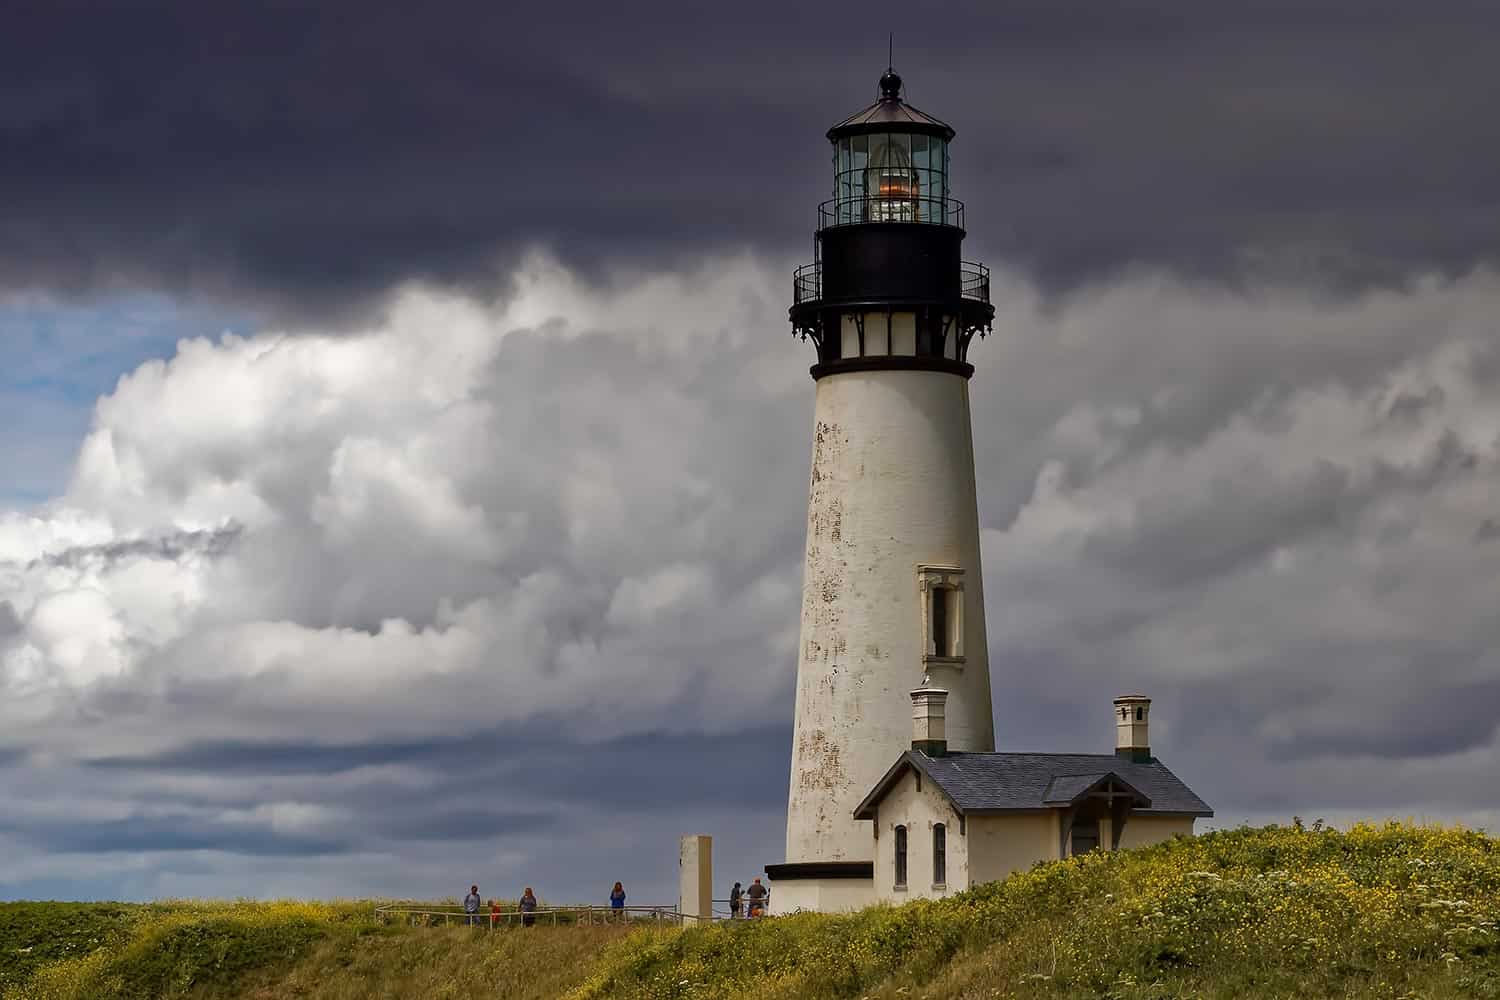 Coastal Lighthouse Oregon Br